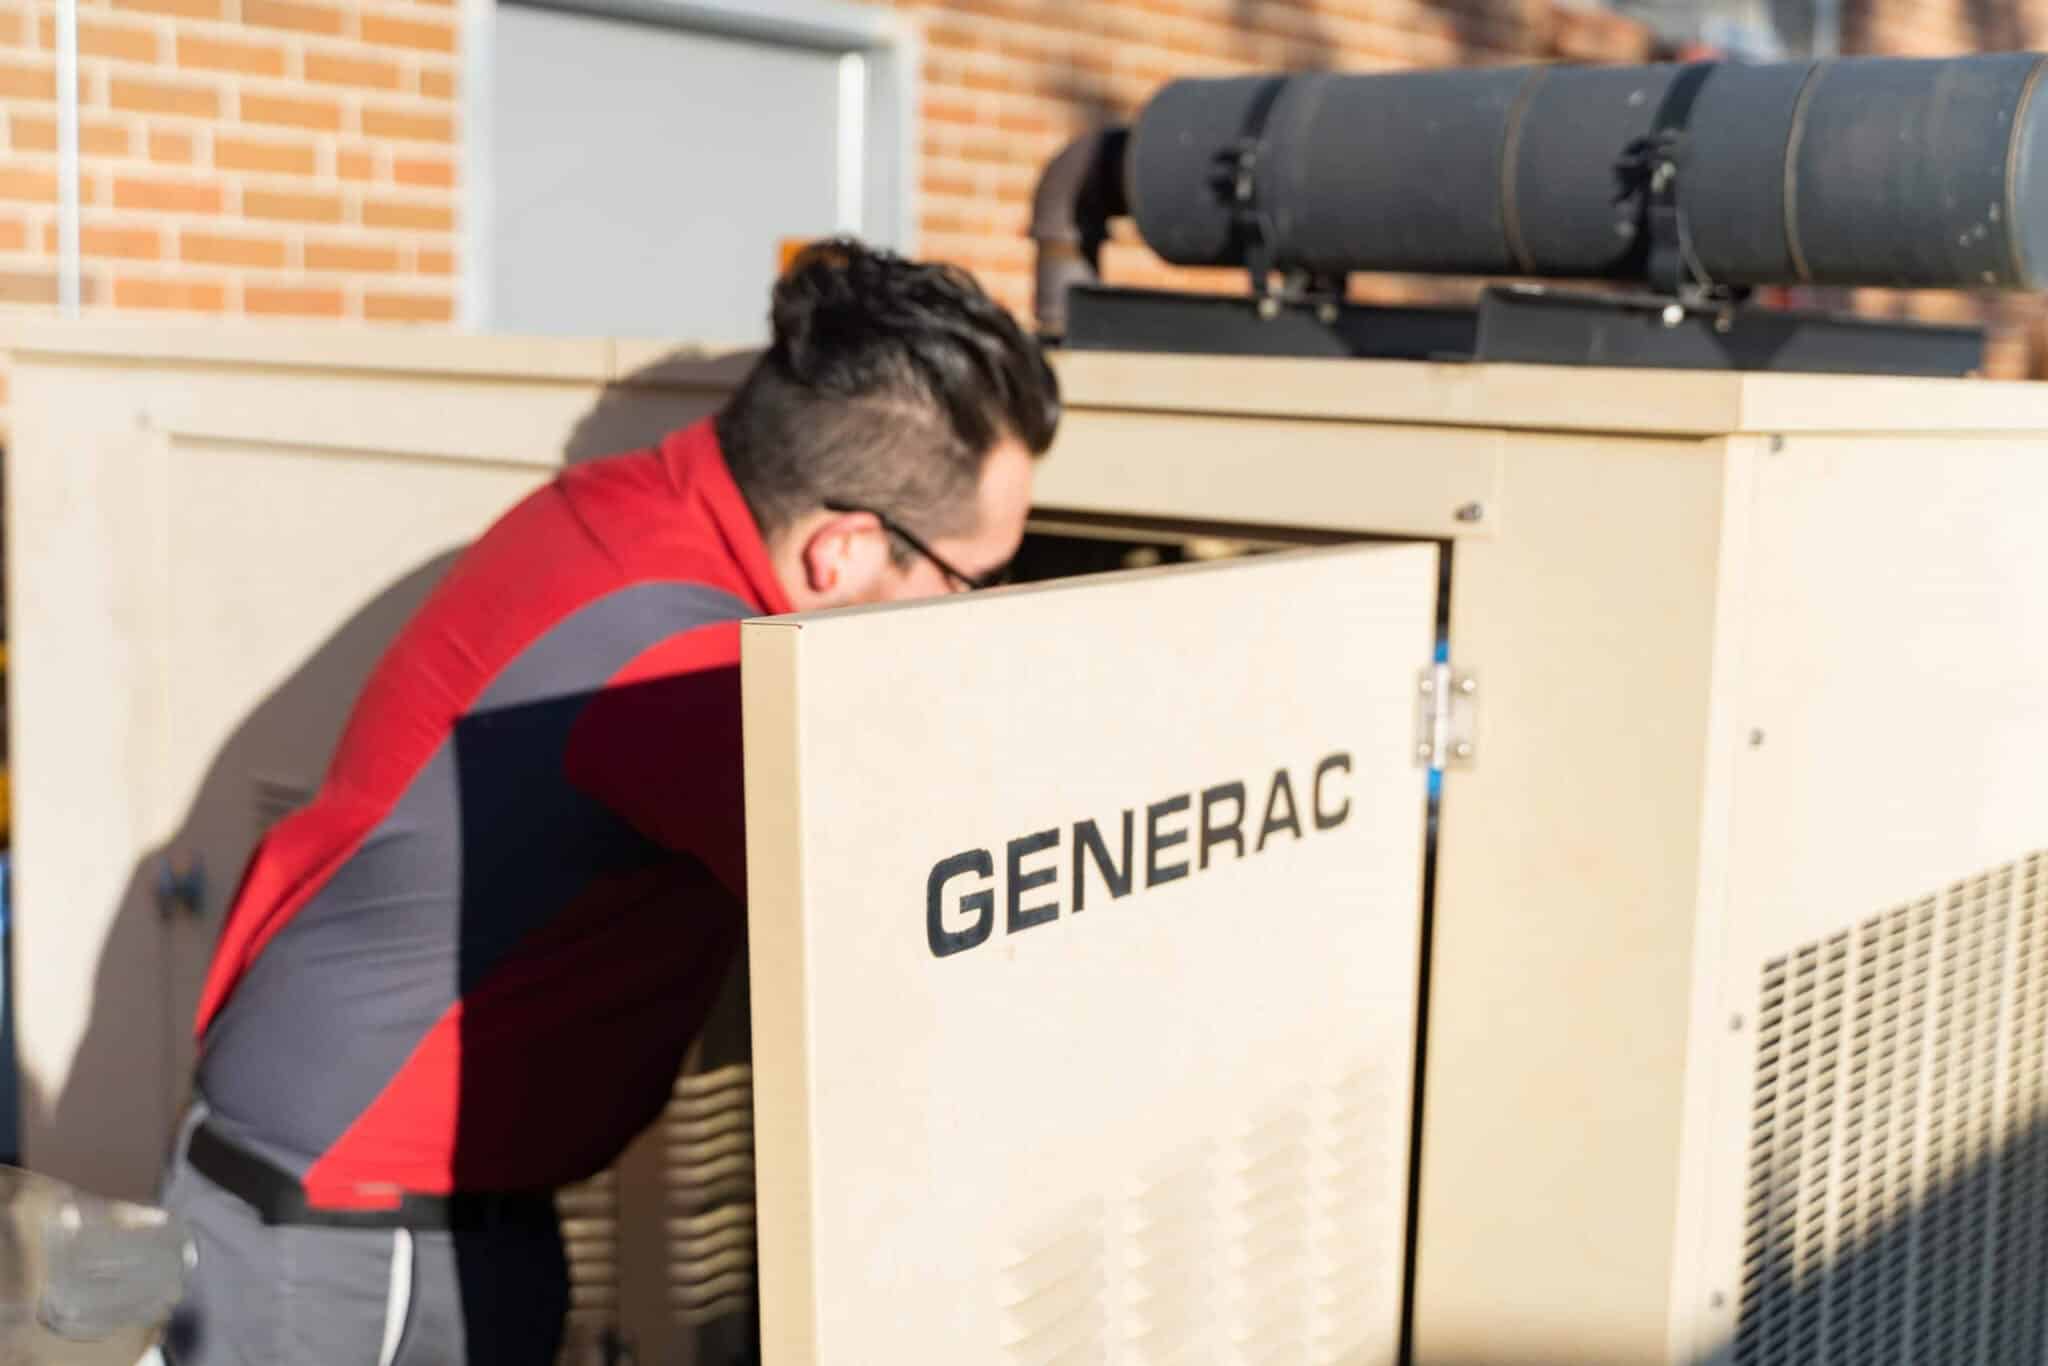 Technician working on a Generac home generator